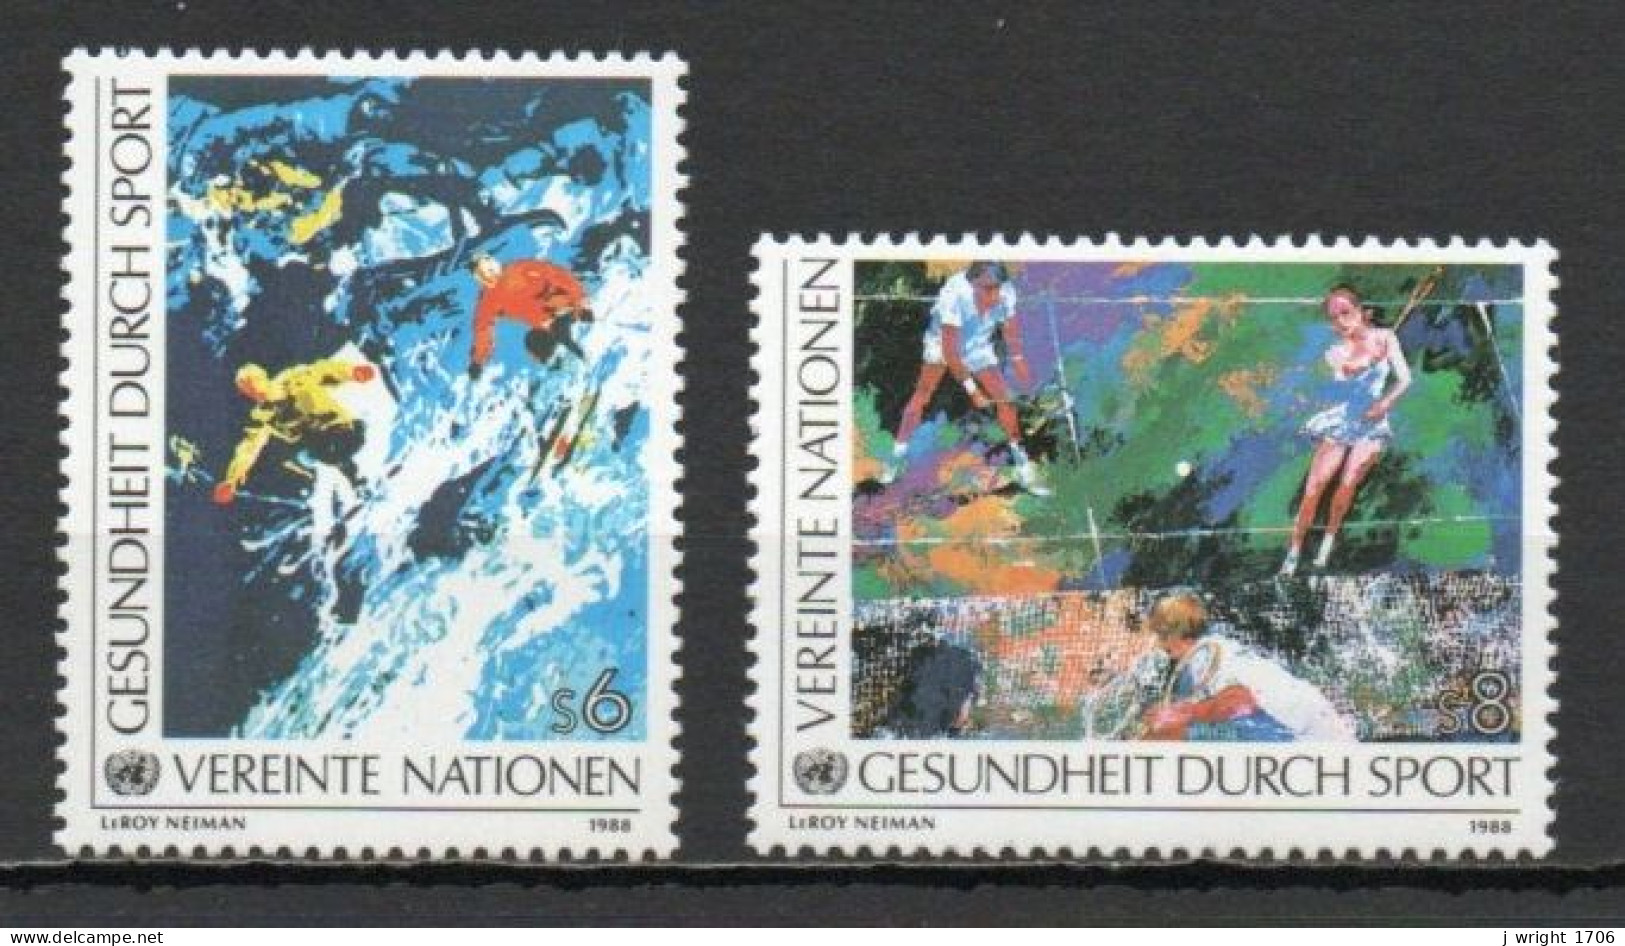 UN/Vienna, 1988, Health In Sports, Set, MNH - Unused Stamps